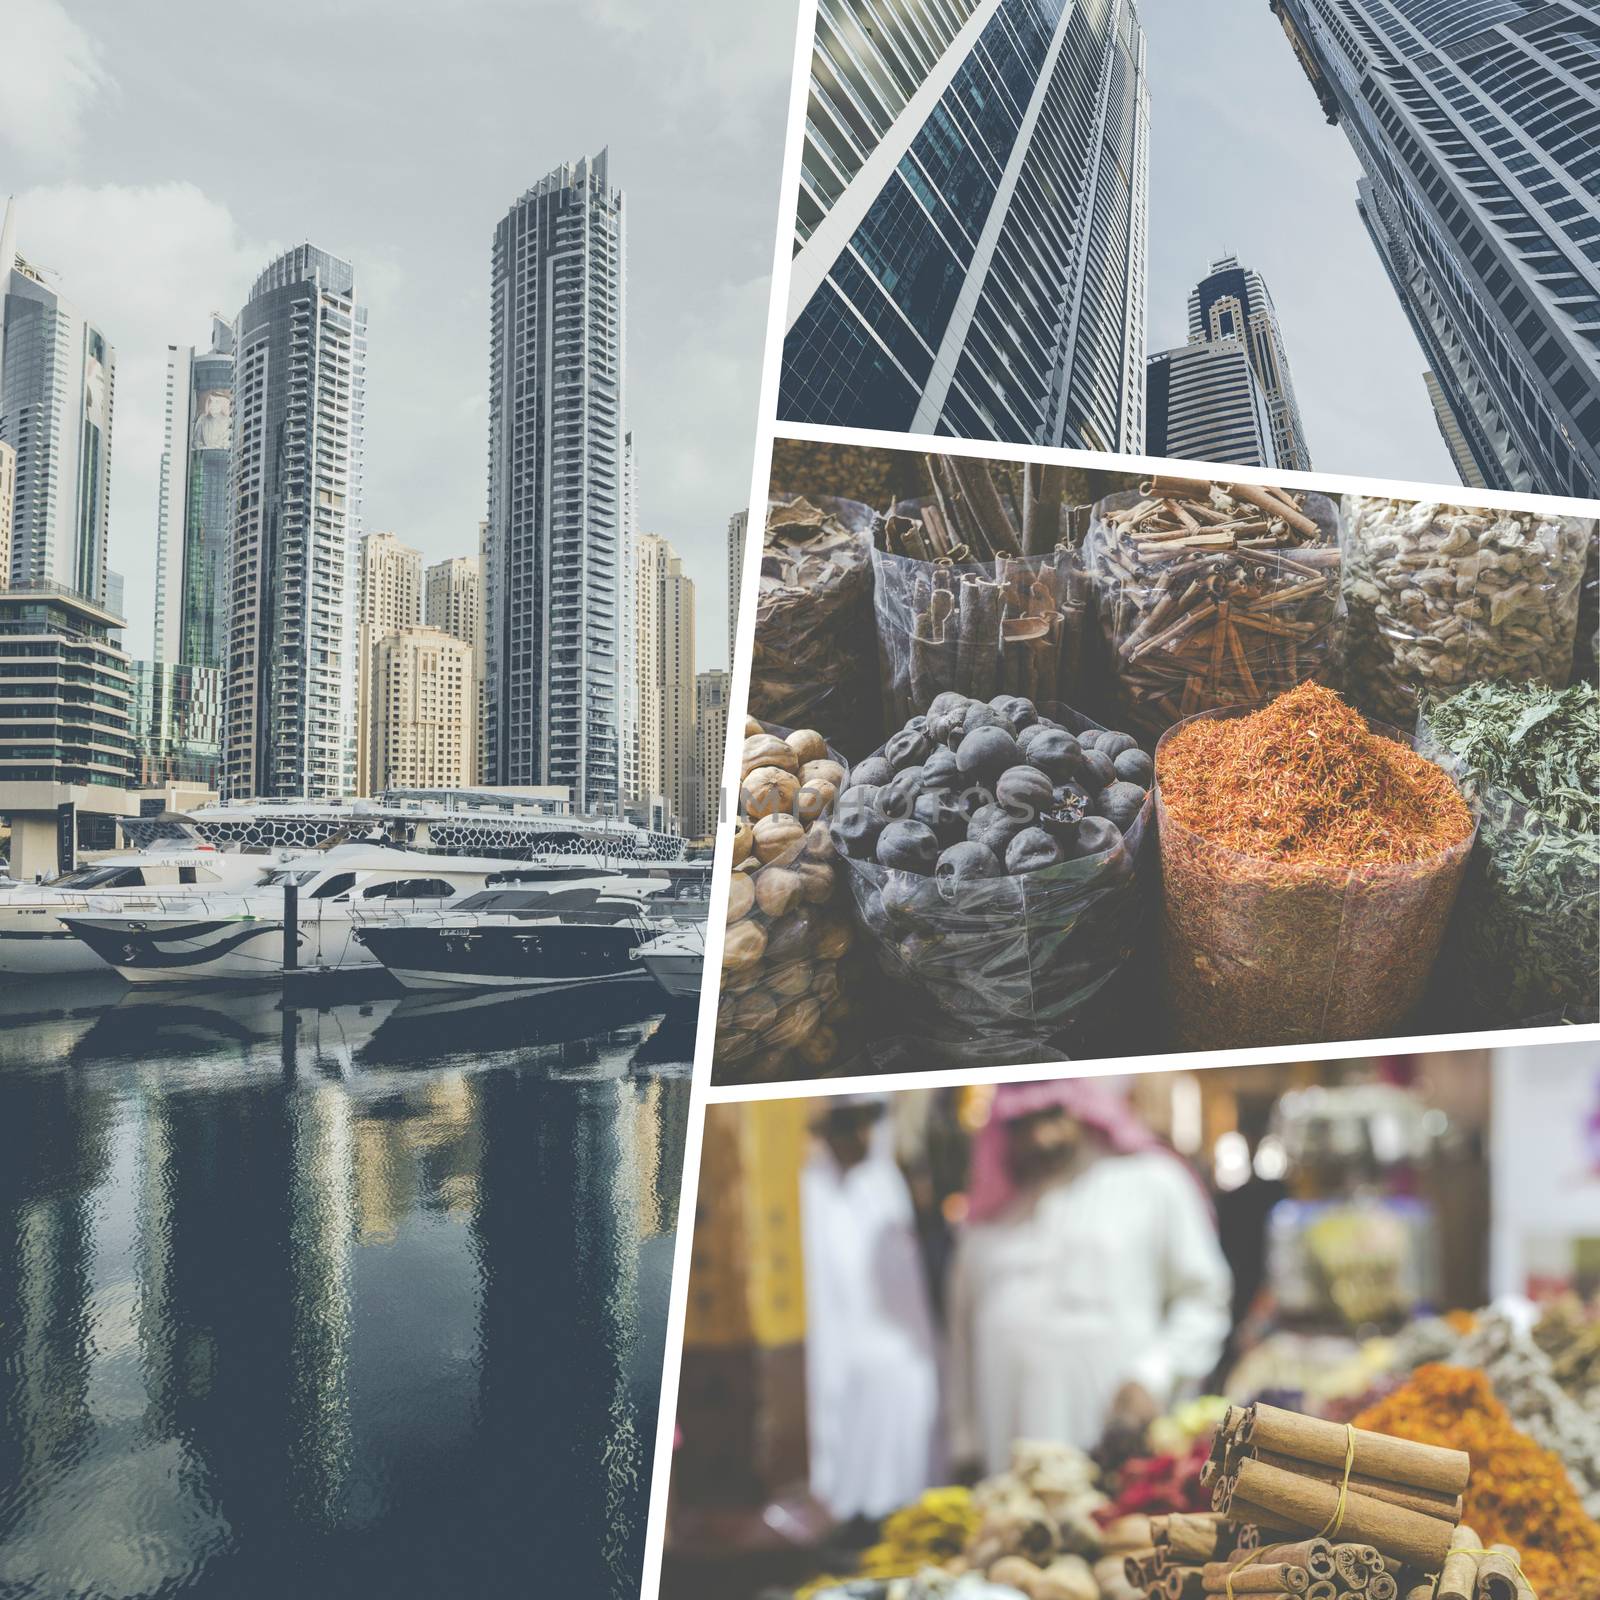 Collage of photos from Dubai. UAE

